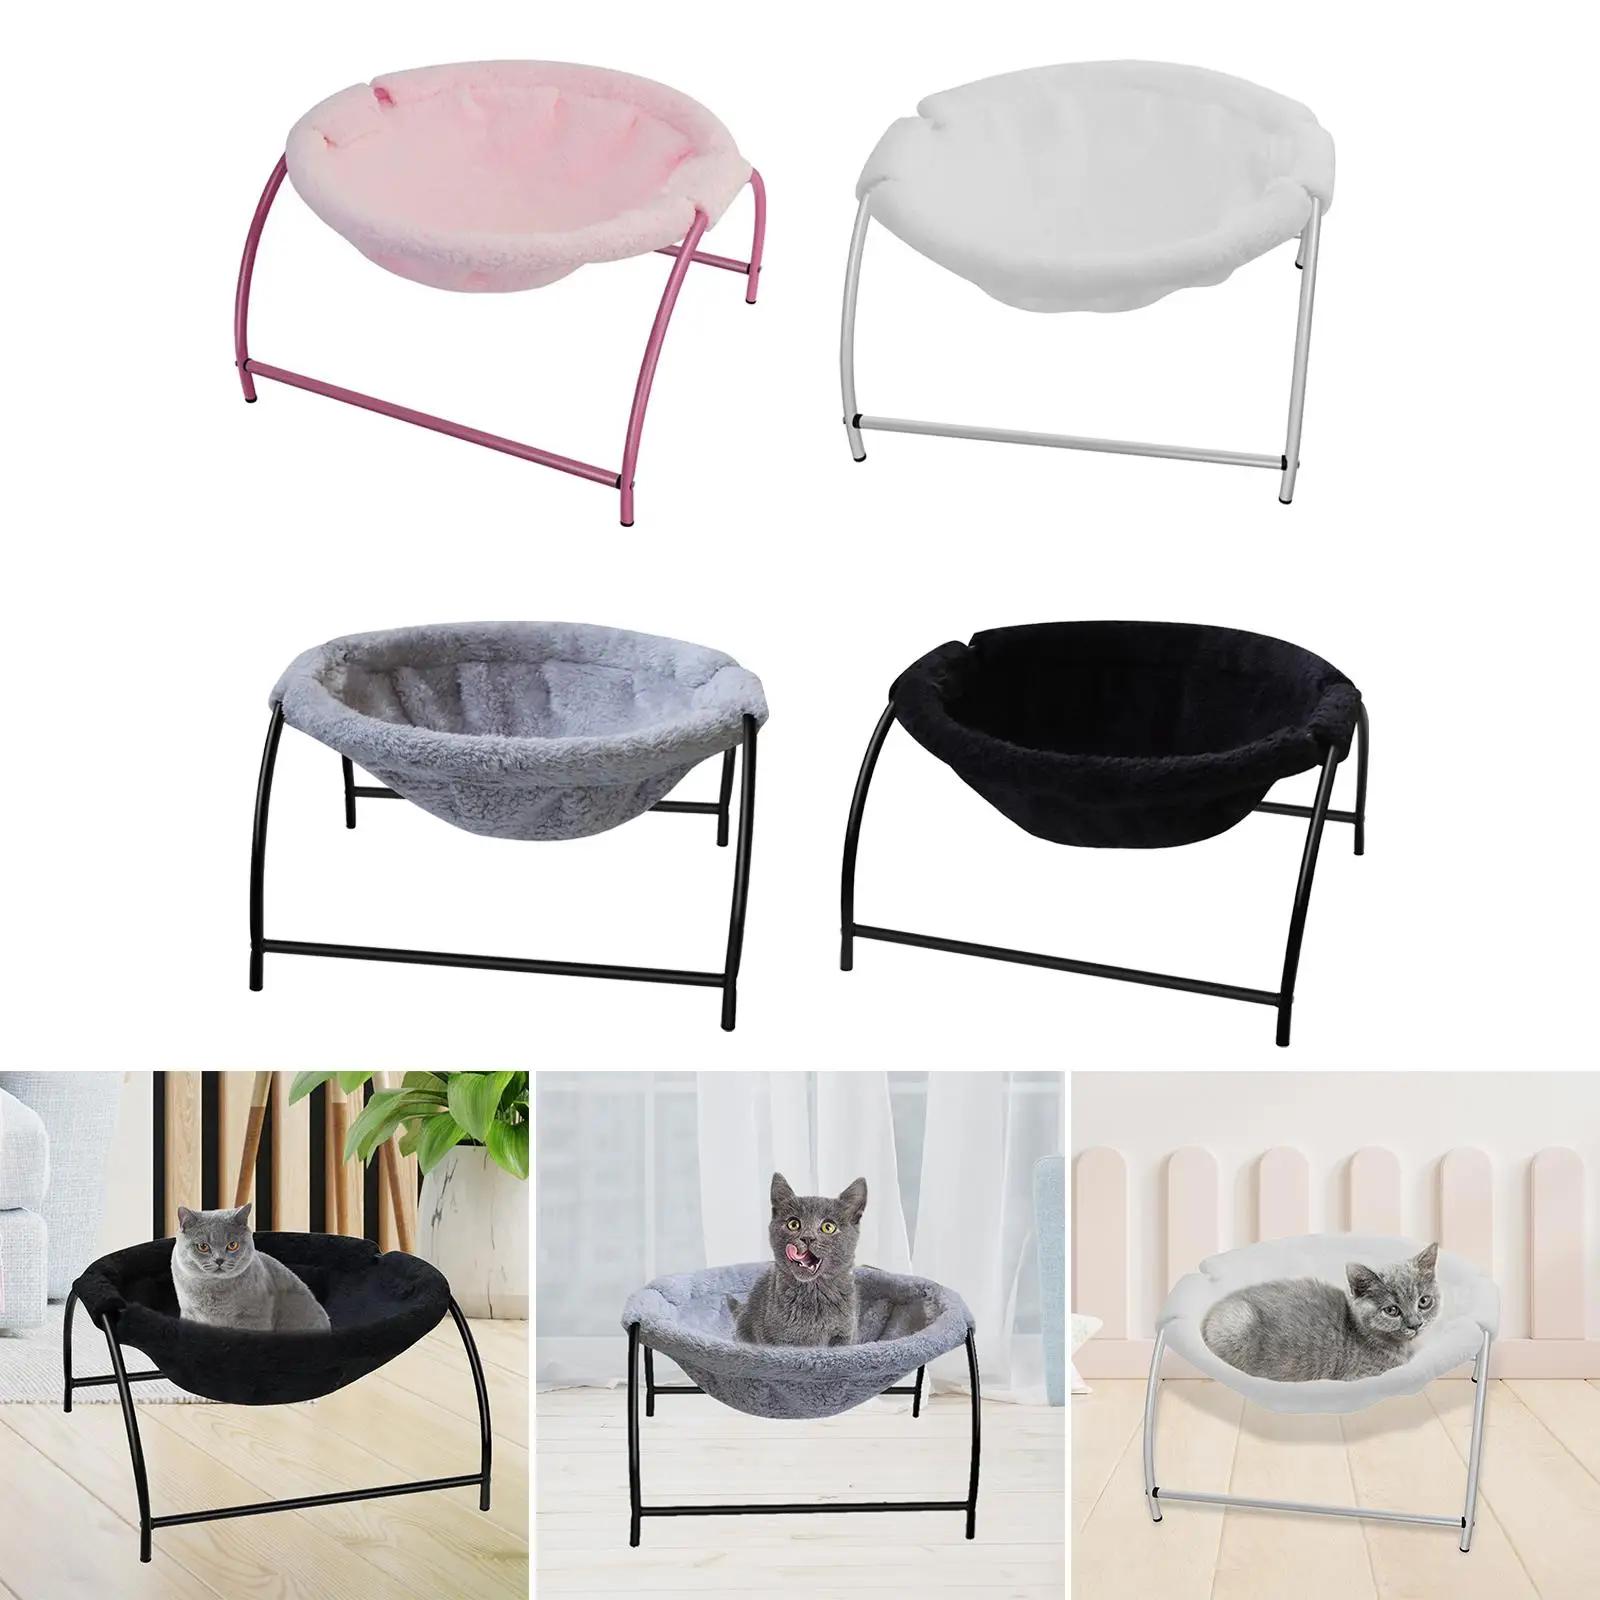 Comfortable Cat Hammock Dog Sleeping Bed Washable Detachable Stable Structure for Kitten Indoor Outdoor Supplies